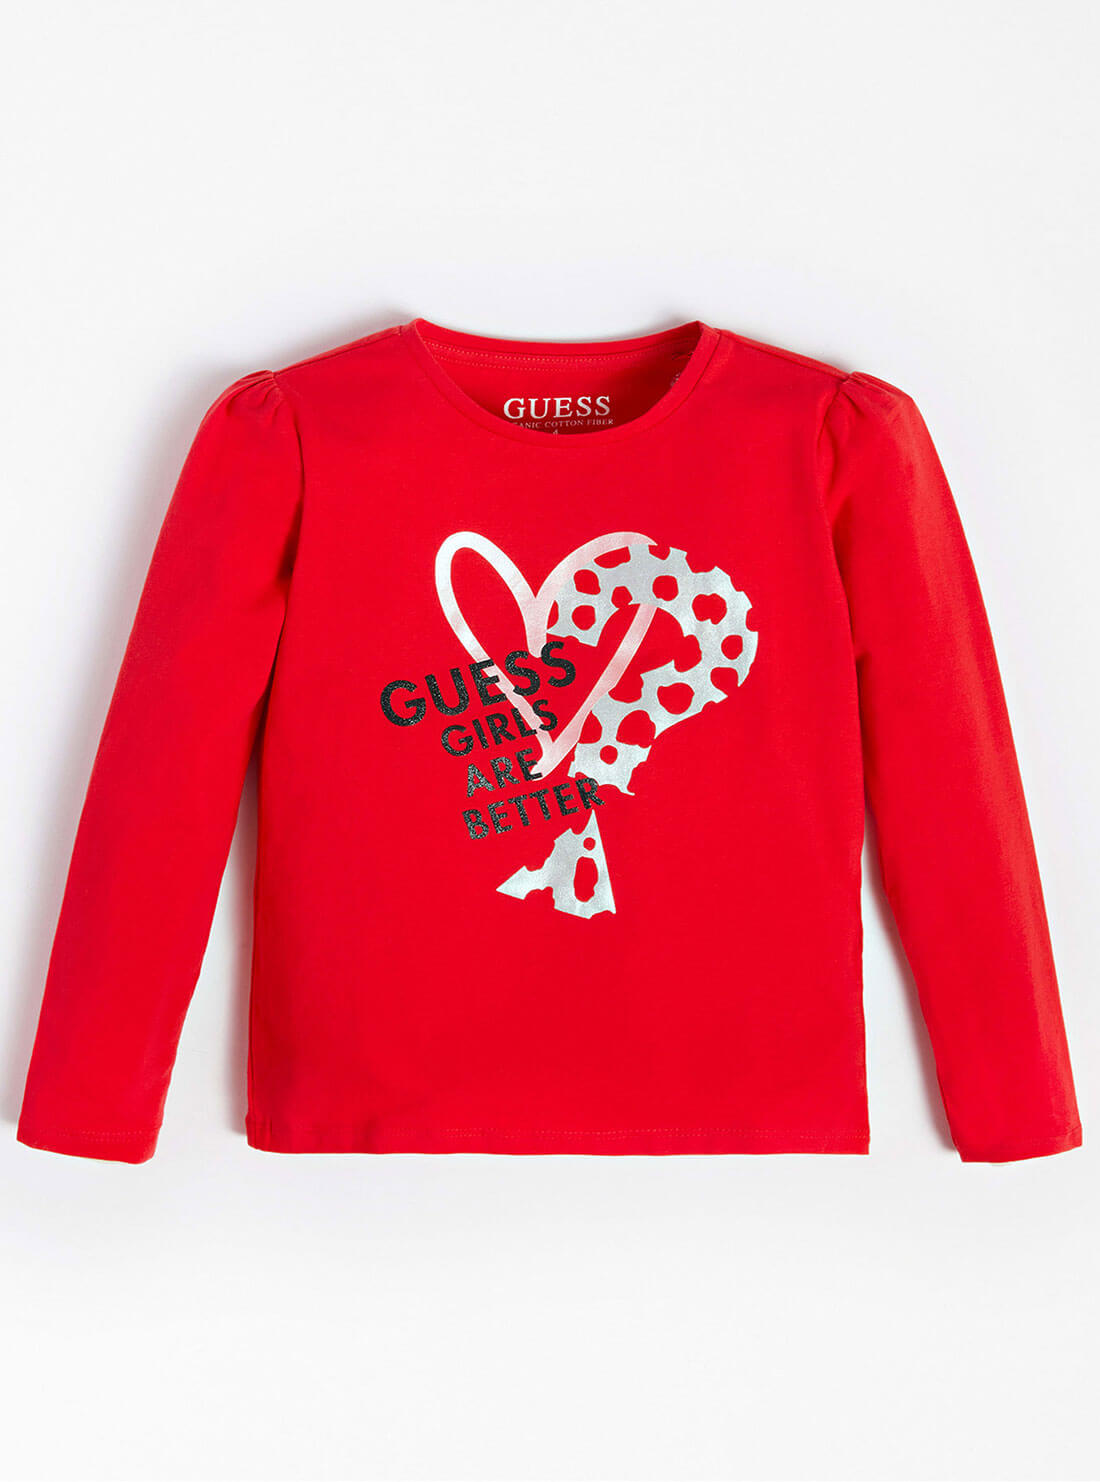 GUESS Little Girls Red Girls Are Better Logo T-Shirt (2-7) K2RI12K6YW1  Front View